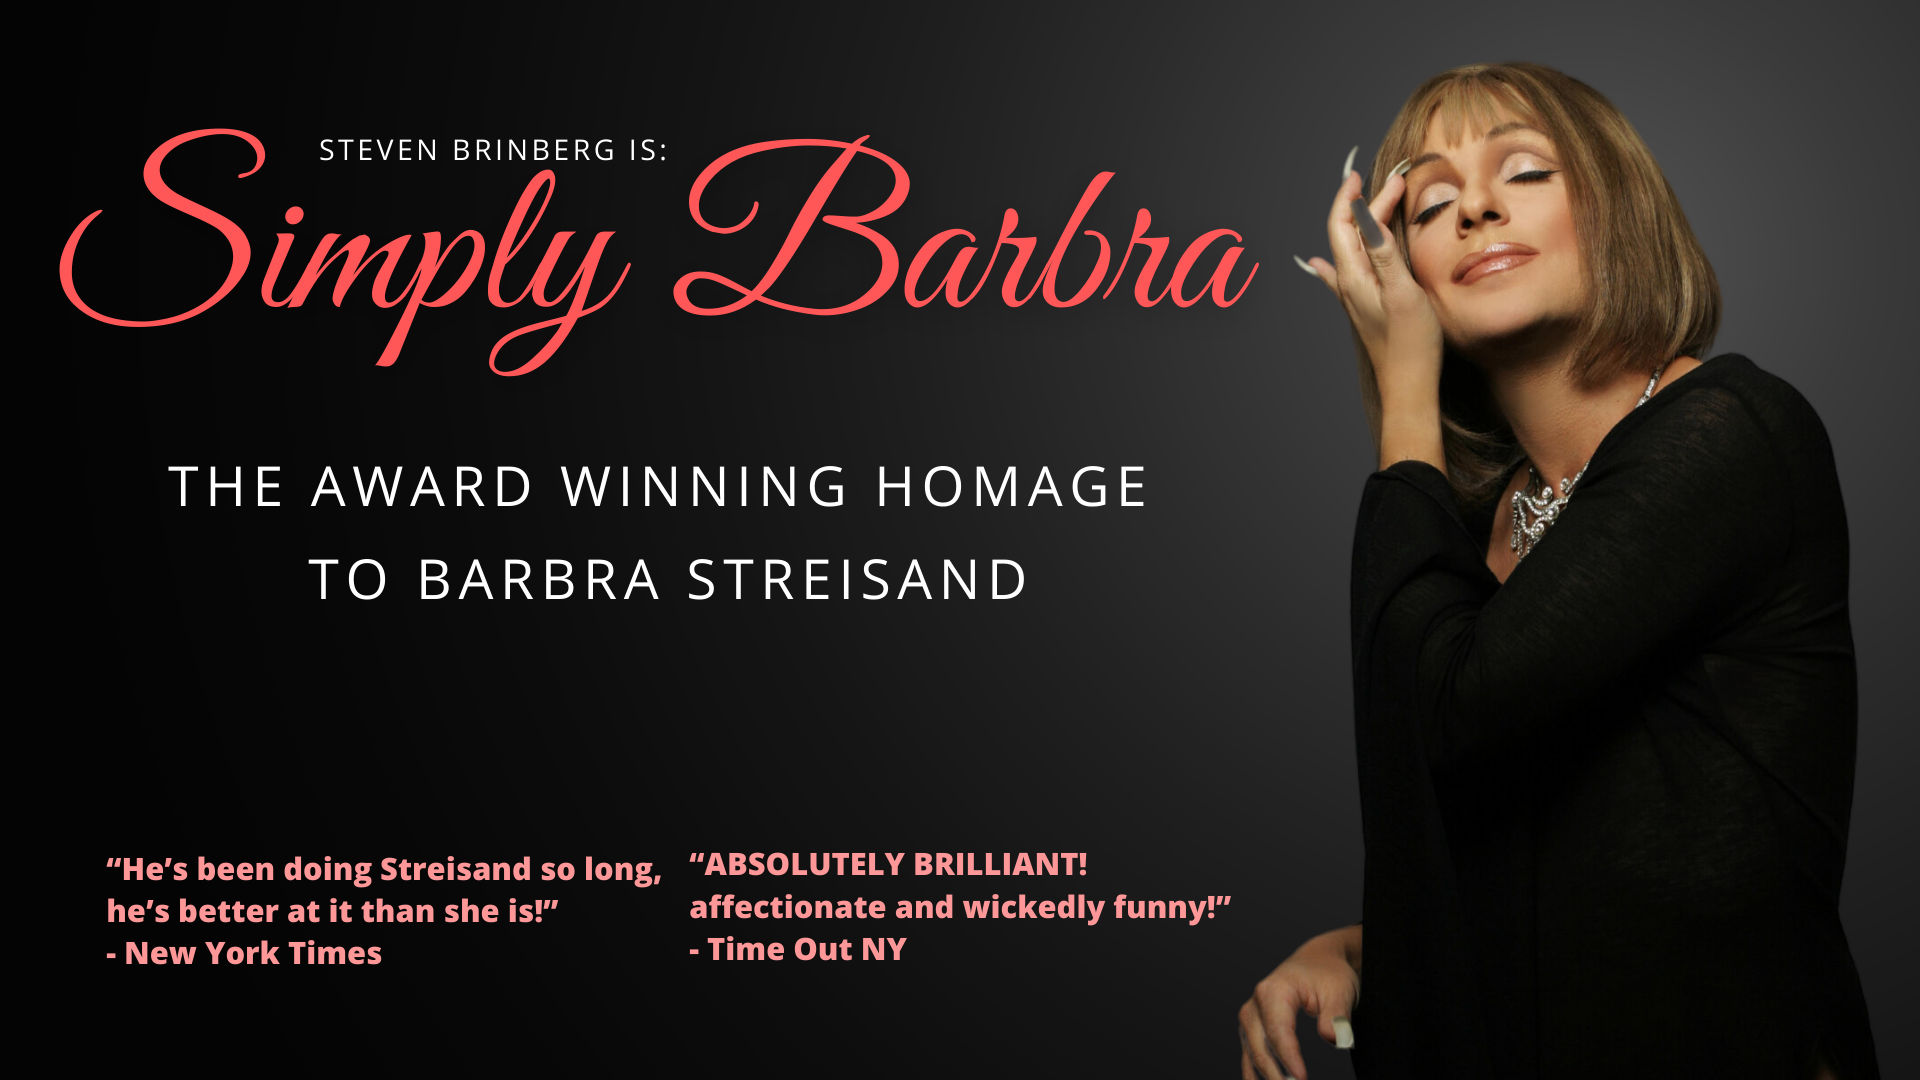 Simply Barbra - Steven Brinberg writes and stars as Simply Barbra